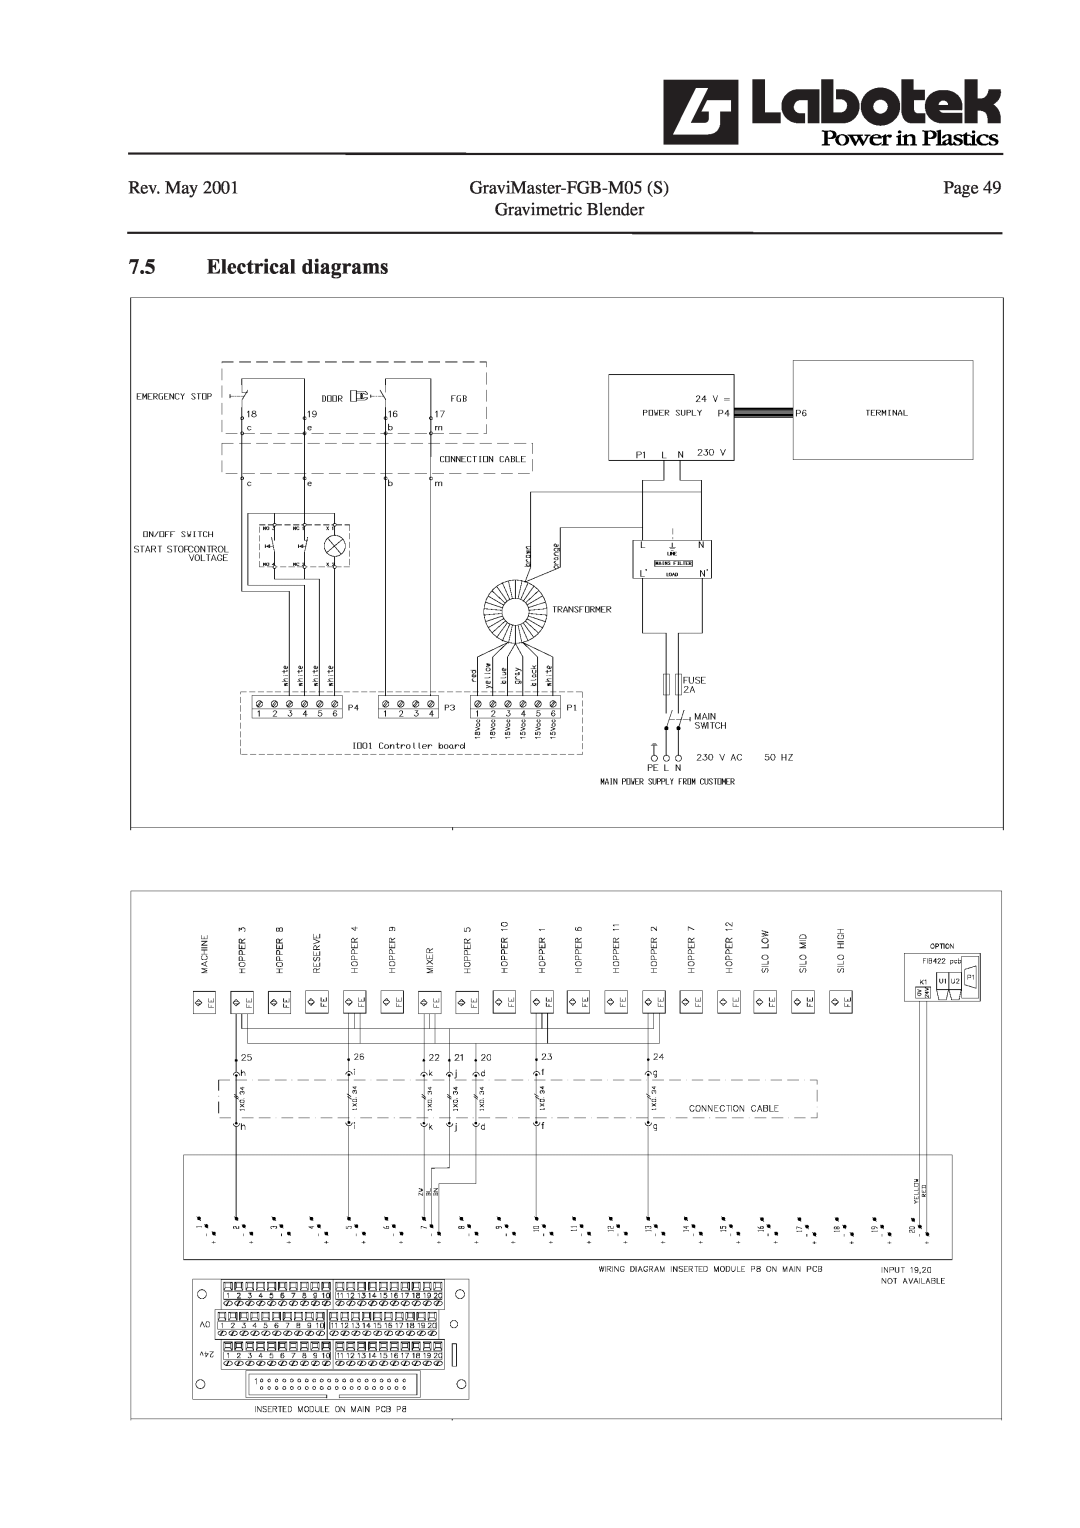 GE manual 7.5Electrical diagrams, Rev. May, GraviMaster-FGB-M05S, Page, Gravimetric Blender 